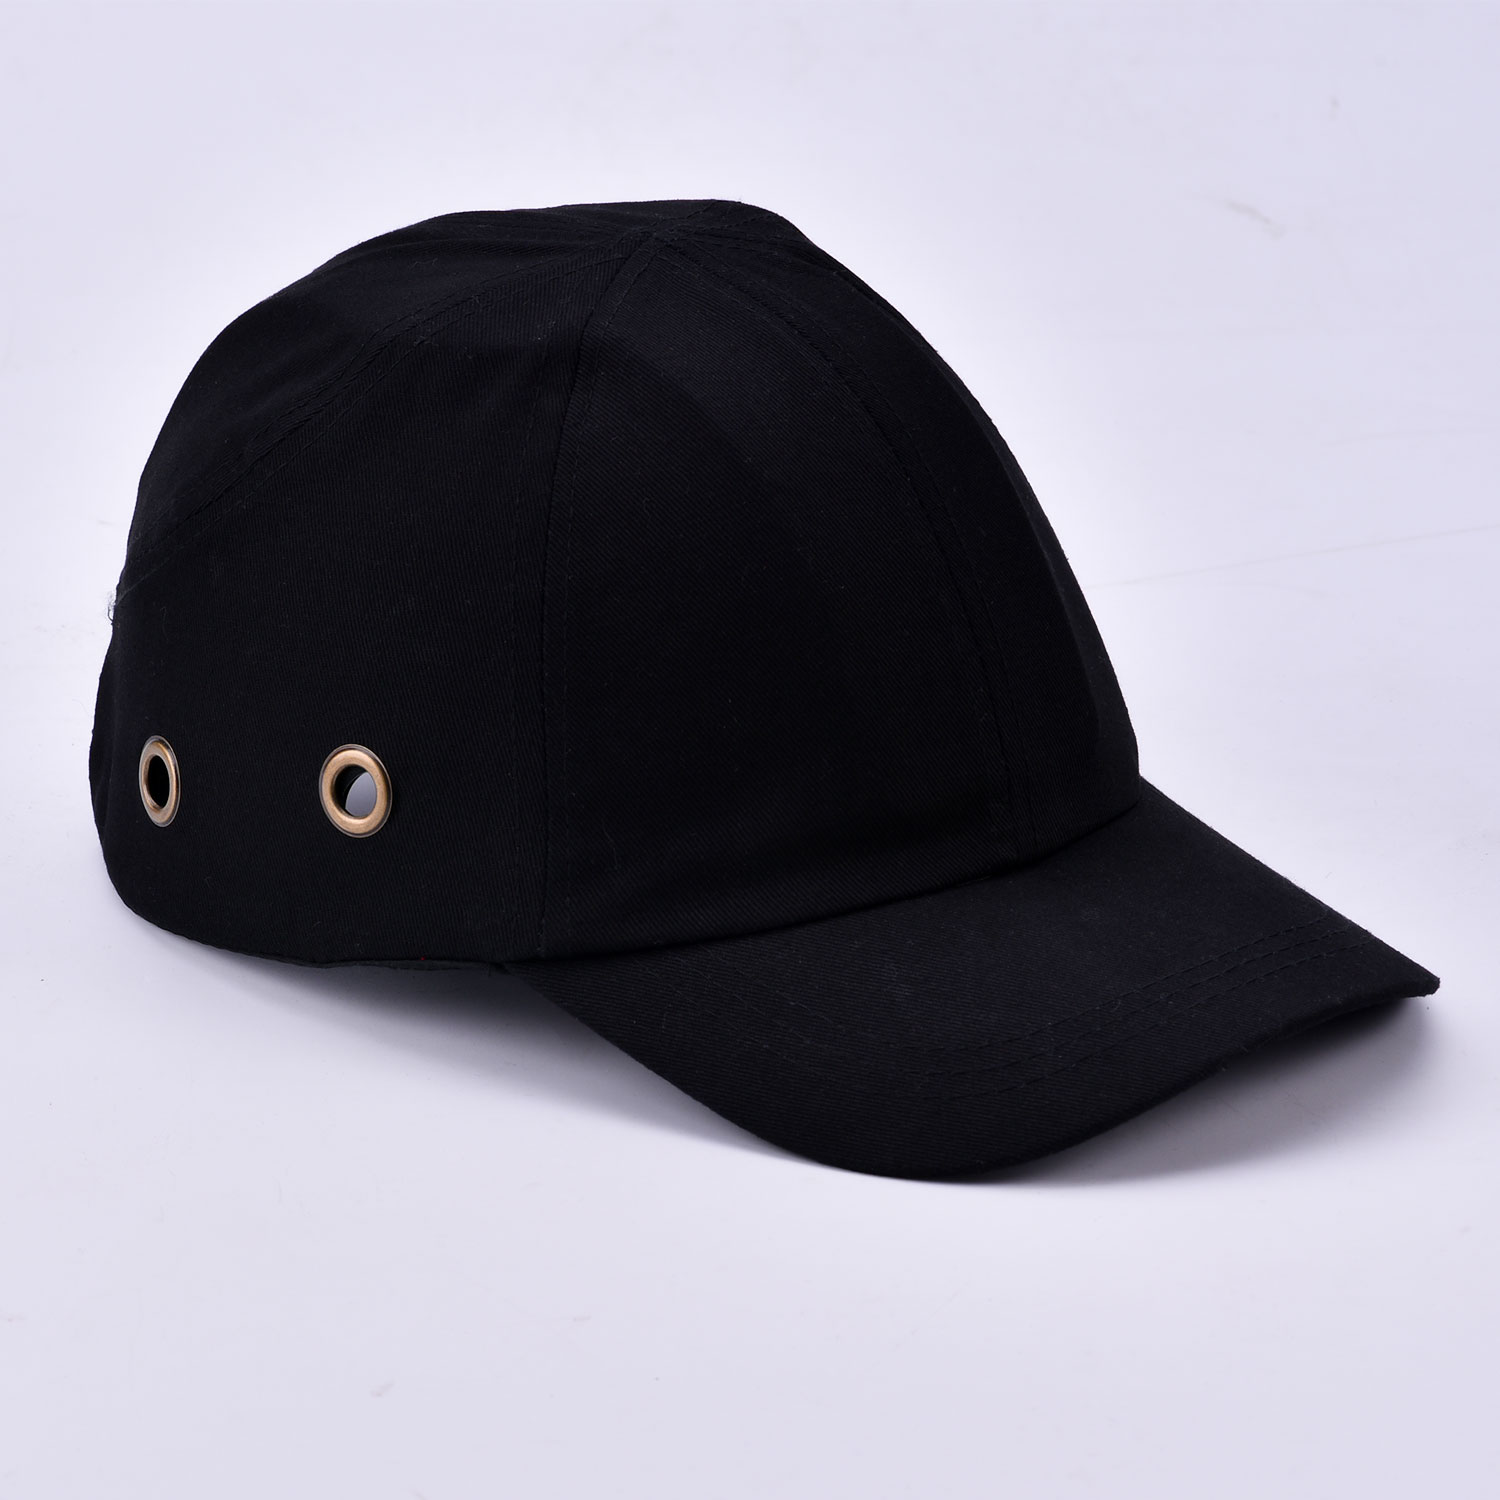 Basball Design Safety Cap Wh001 Black